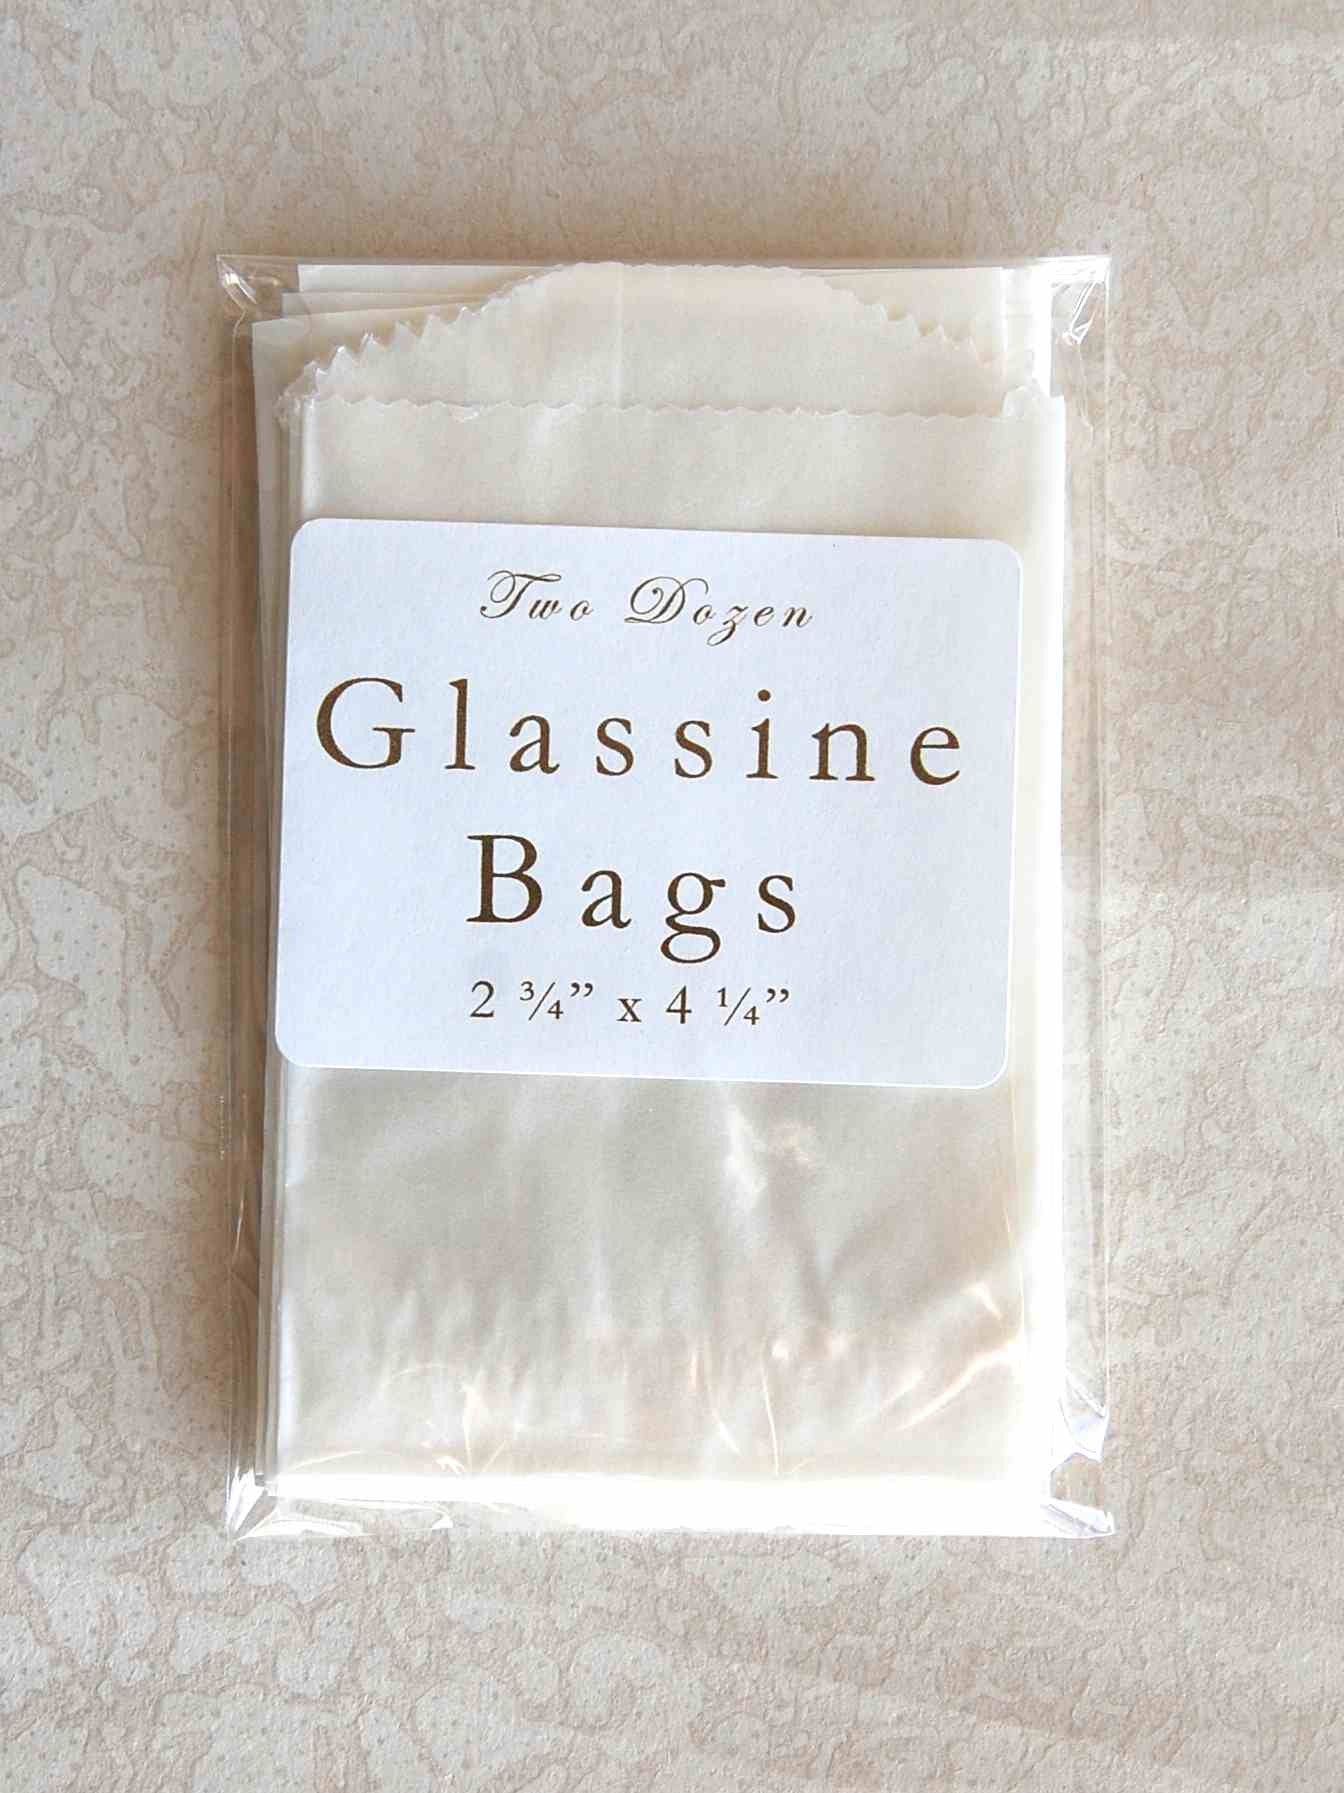 Glassine Envelopes – Rose Mille